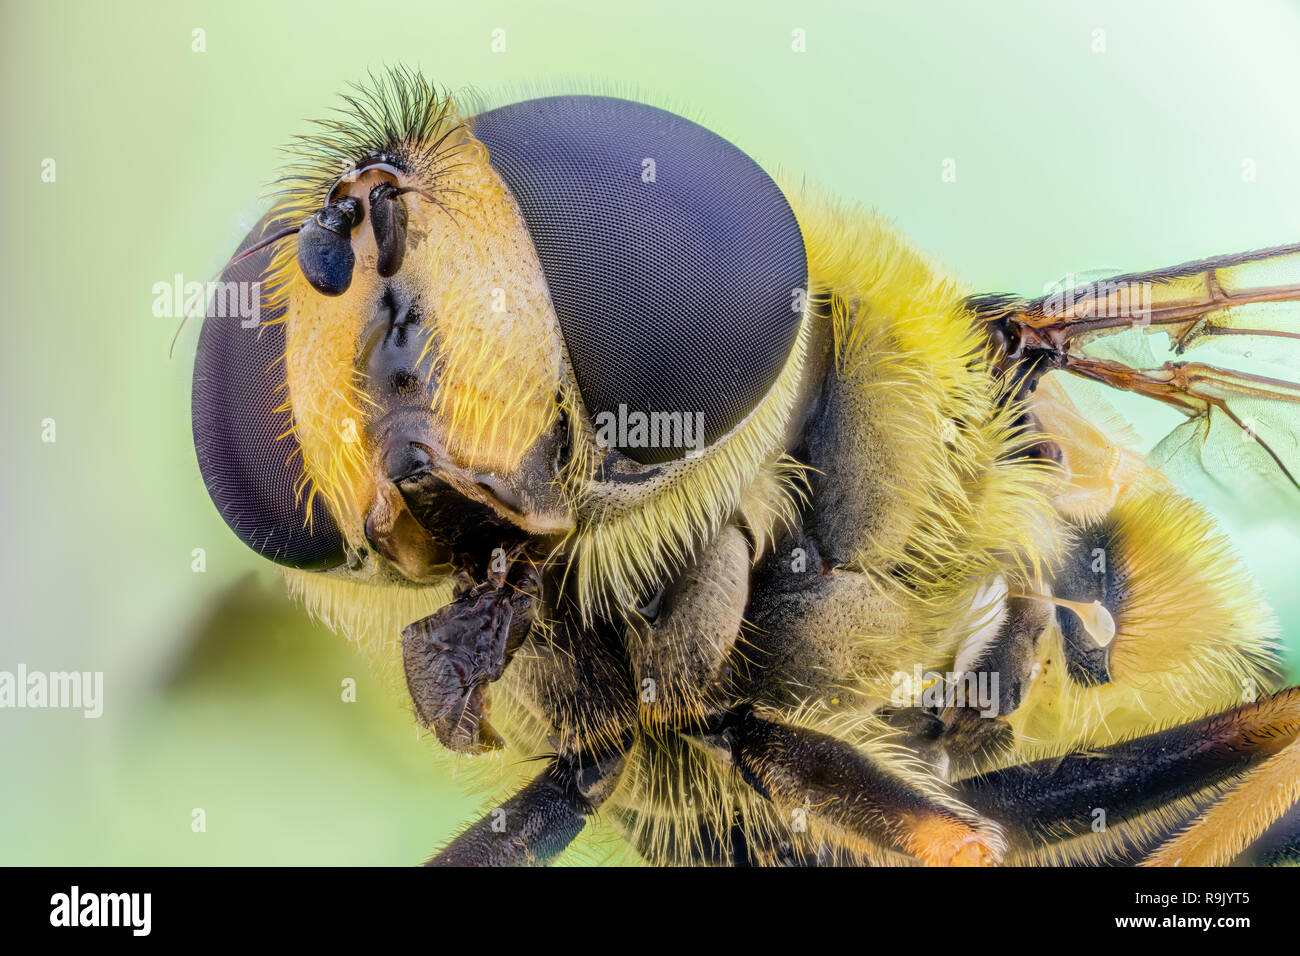 Totenkopfschwebfliege, Myathropa florea, Dead Head Hoverfly - Microscope Stacking Extreme Stock Photo